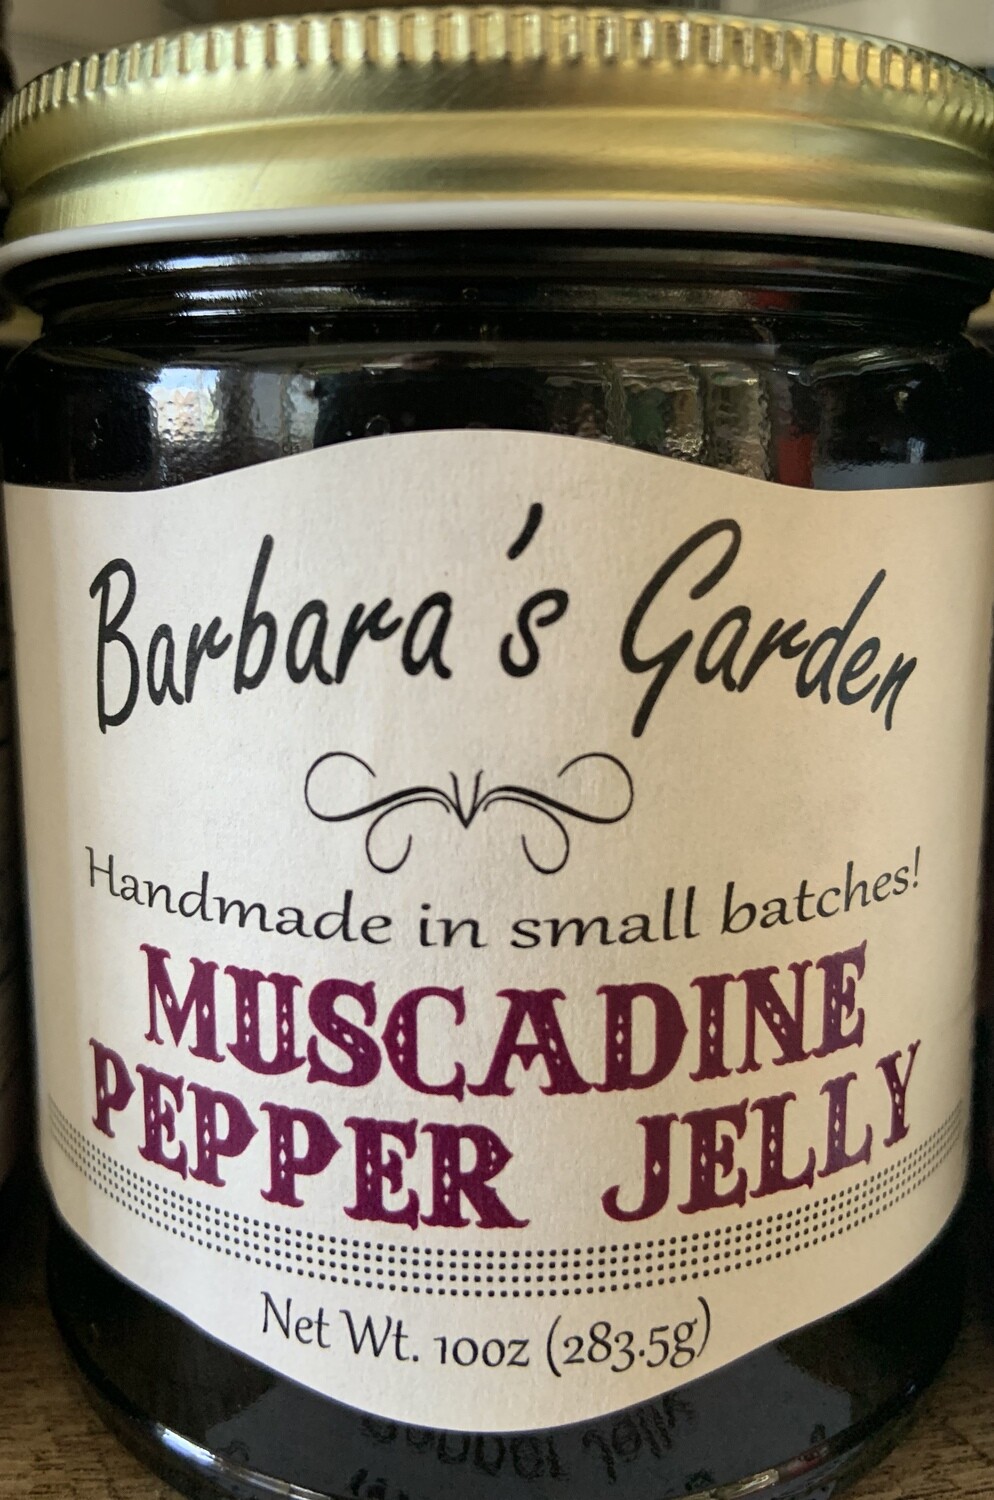 Barbara's Garden Muscadine Pepper Jelly 10 oz